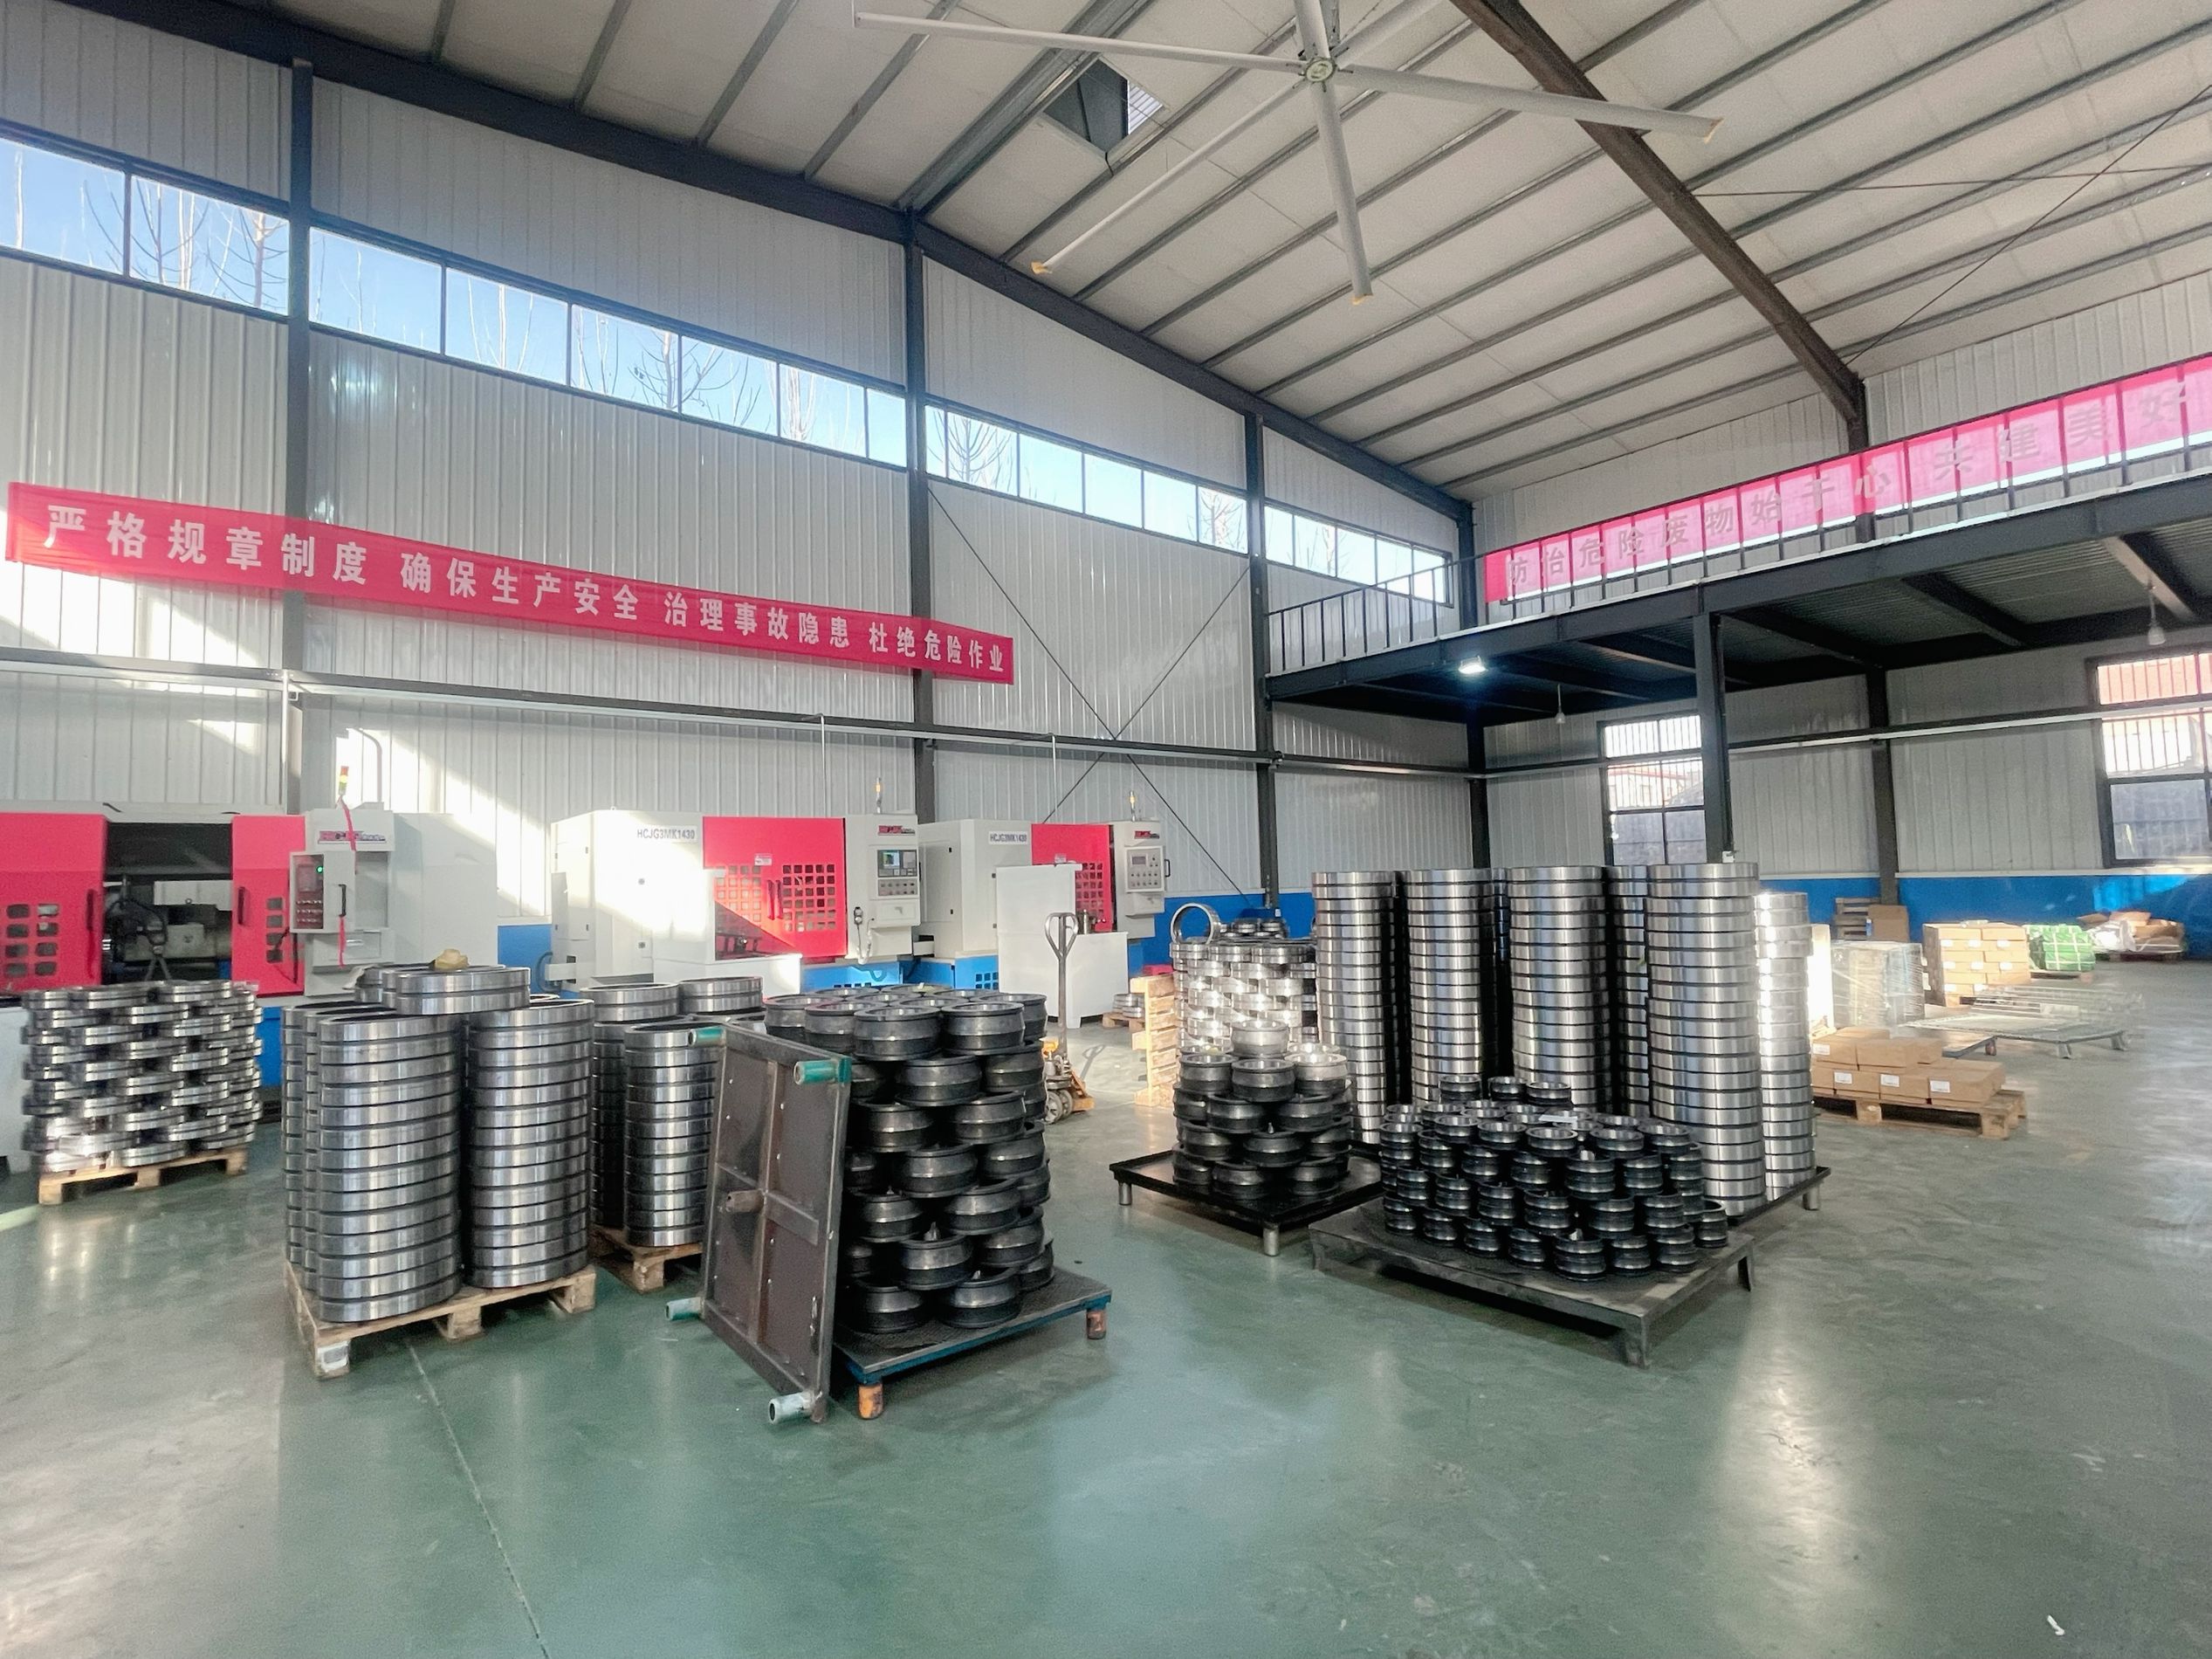 Taller a de Qingdao qingheng bearing co., Ltd.